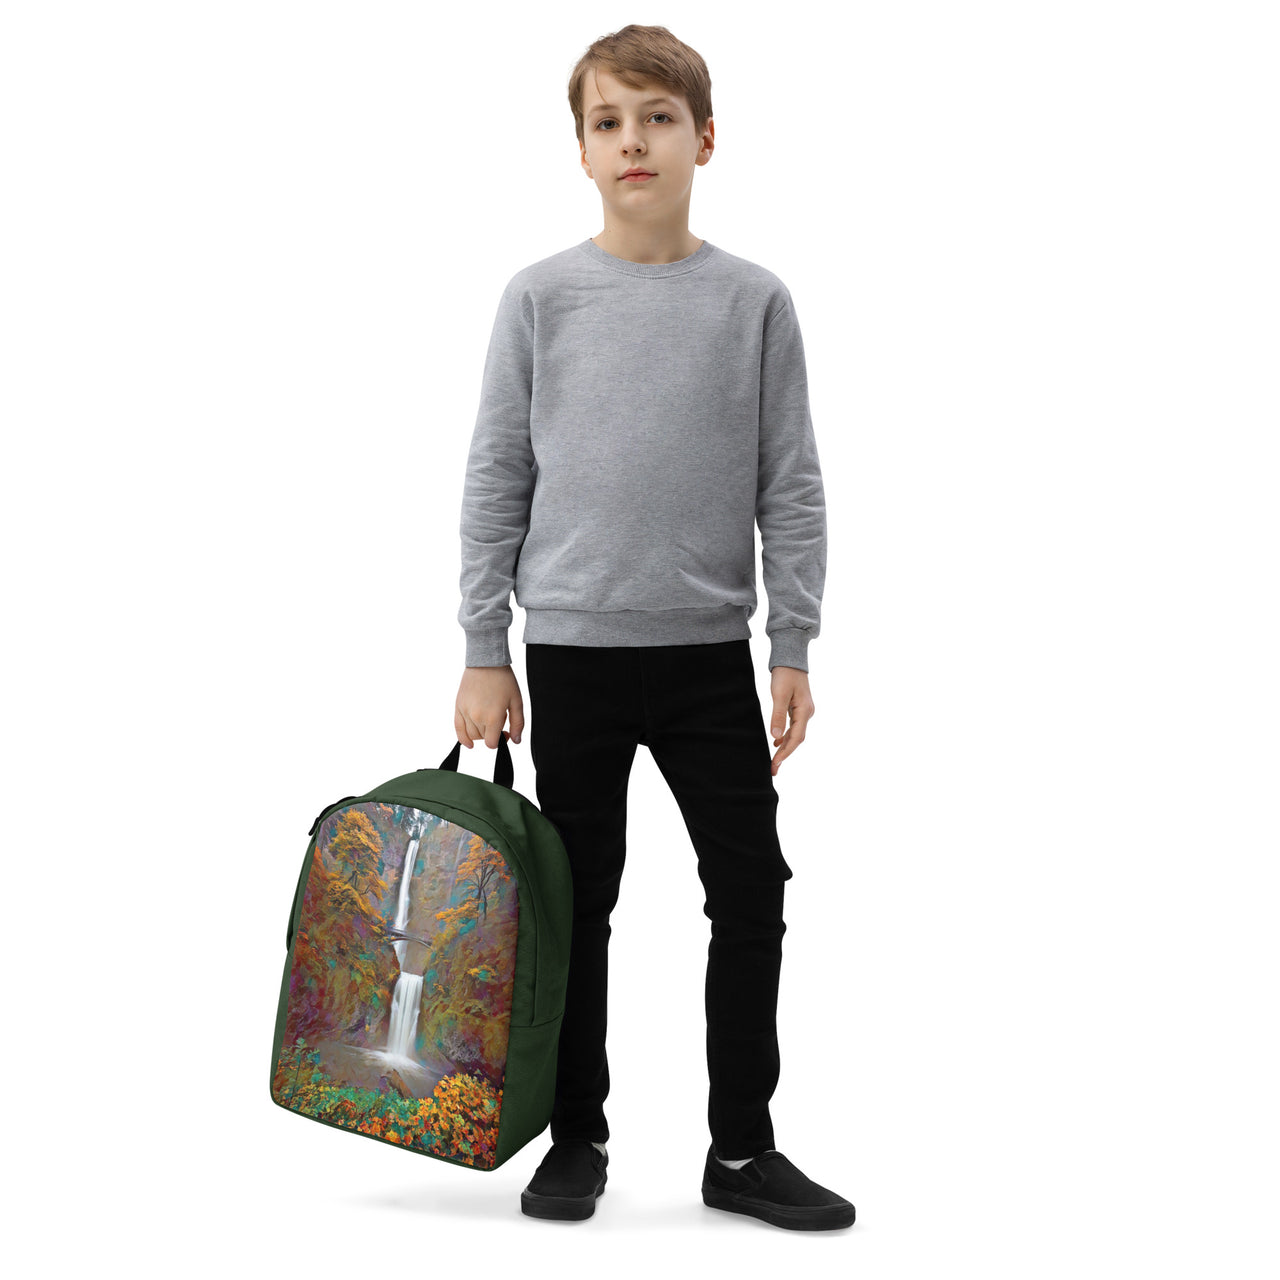 Multnomah Falls - Digital Art - Minimalist Backpack